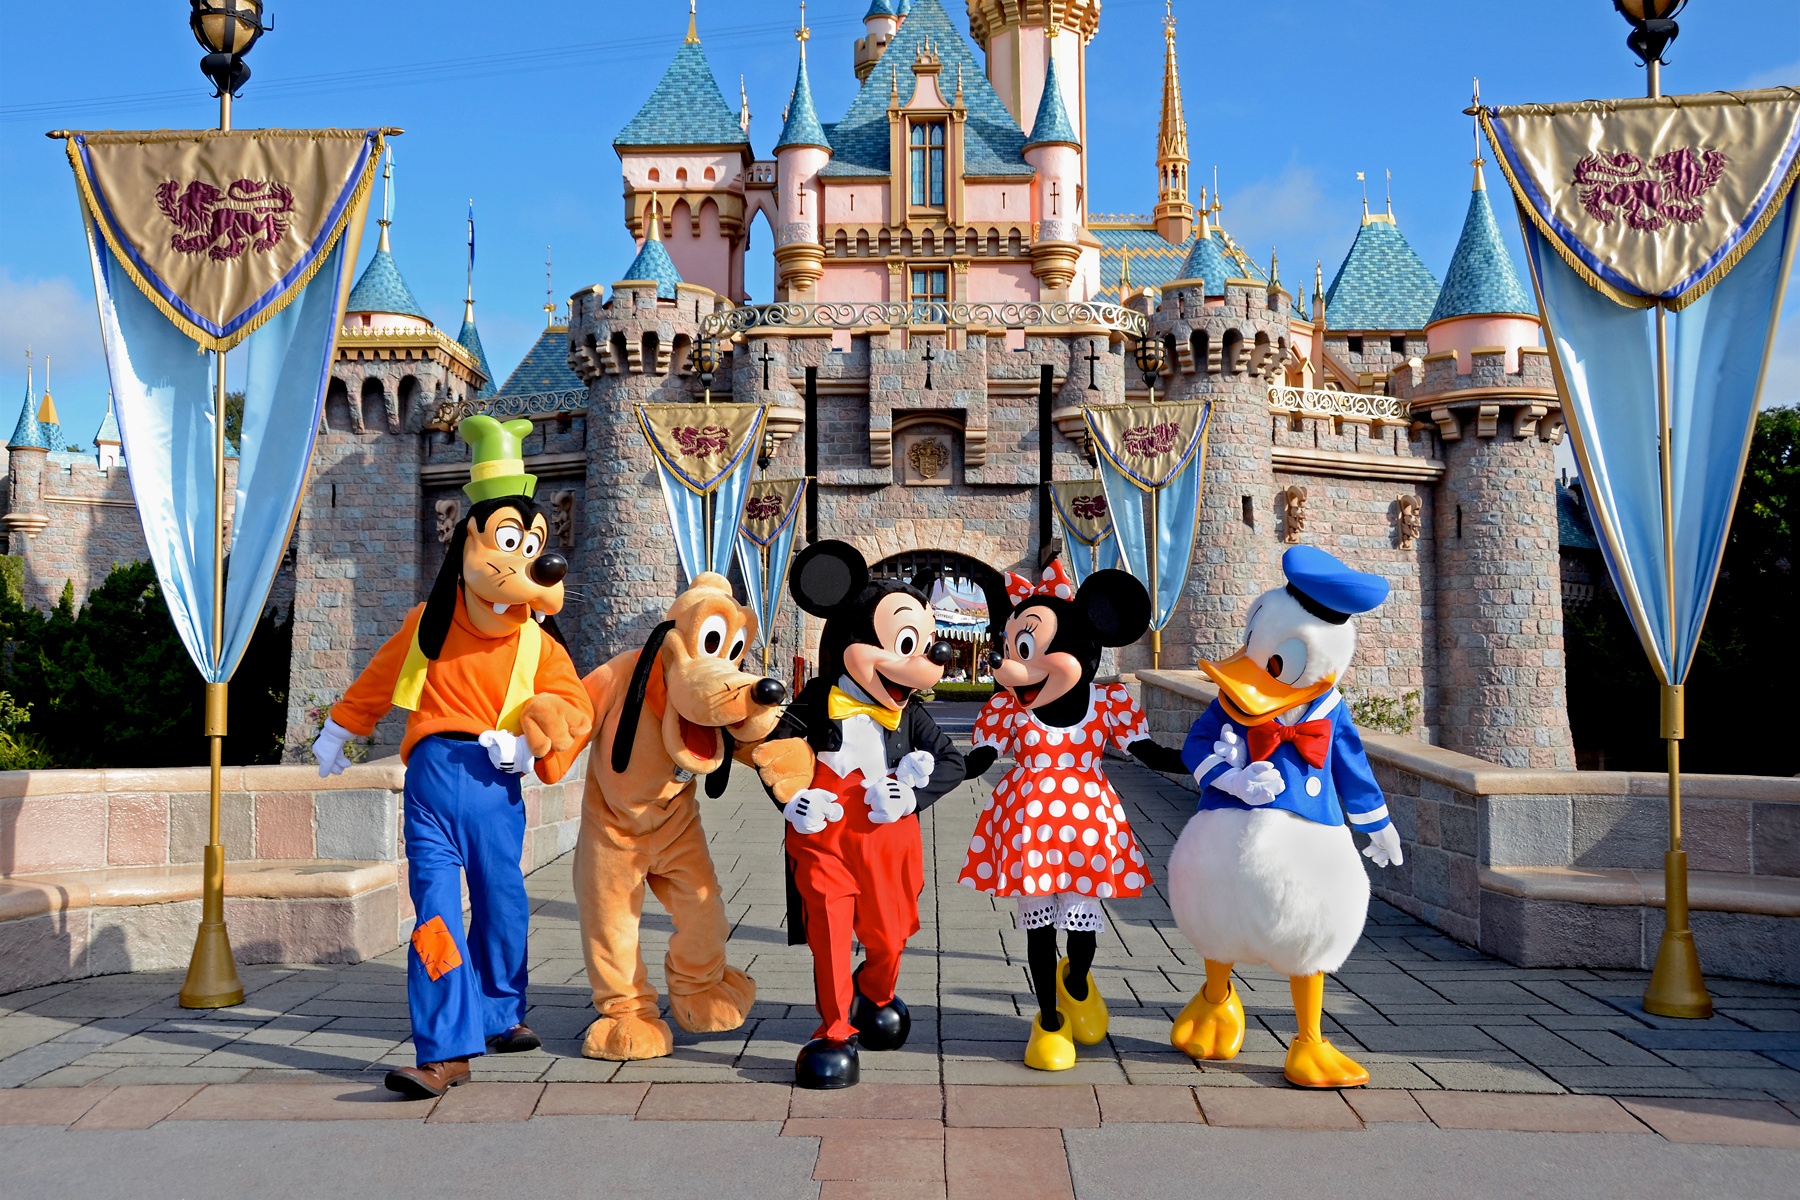 Disneyland mascots